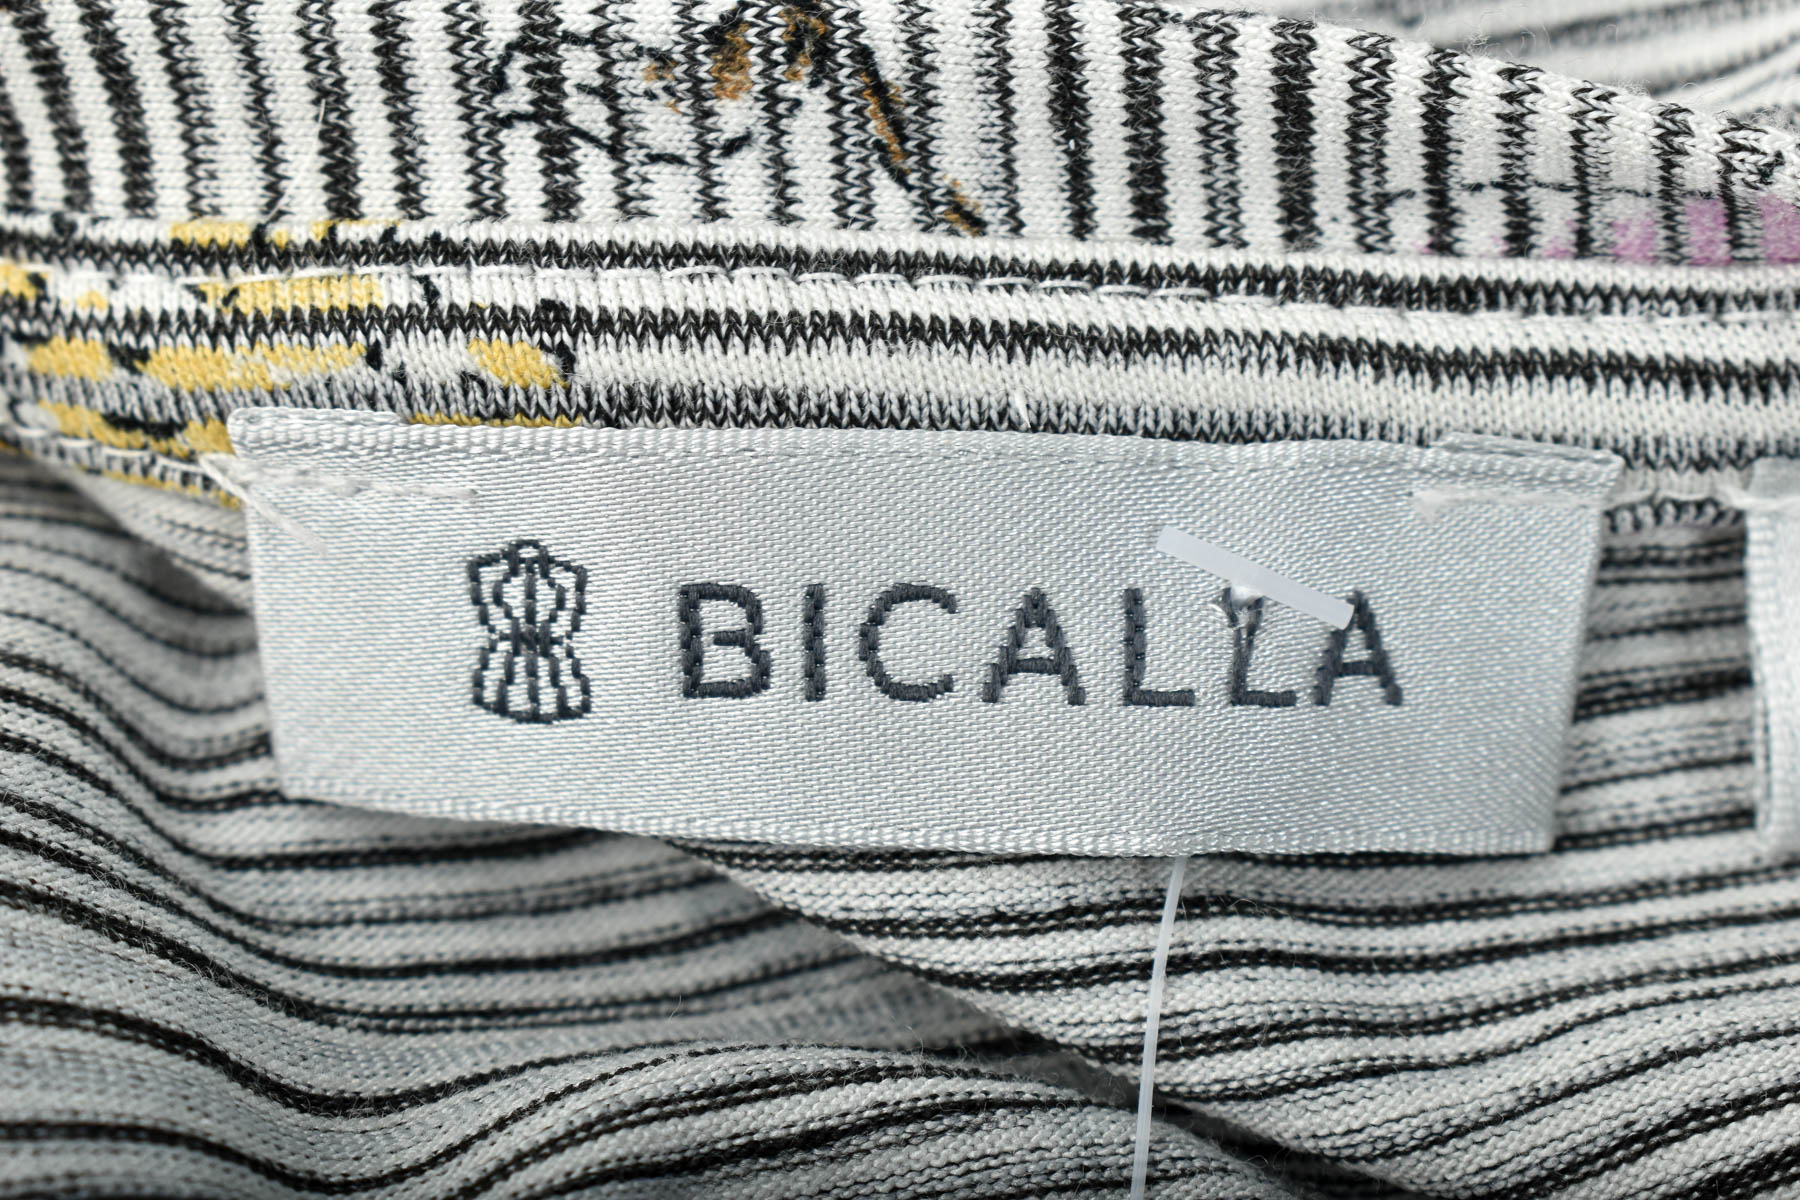 Women's blouse - BICALLA - 2